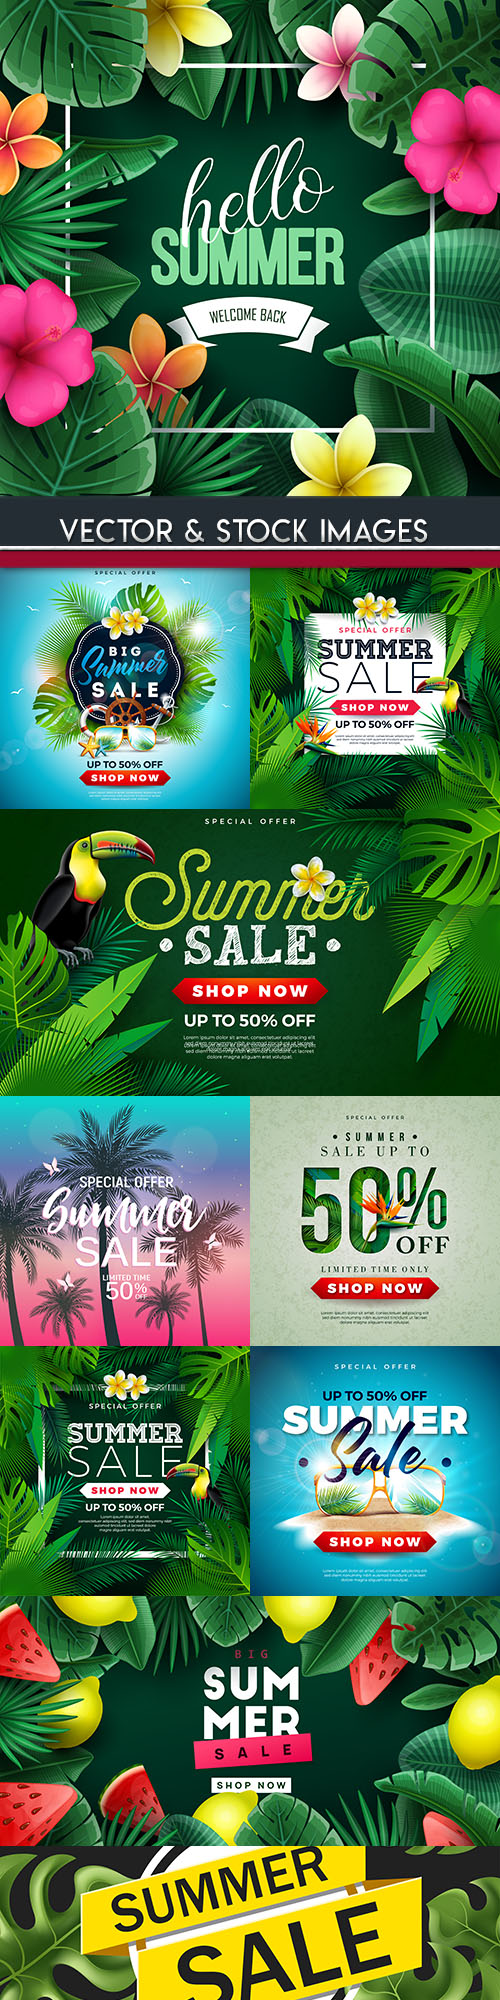 Summer sales special holiday banner illustrations 10